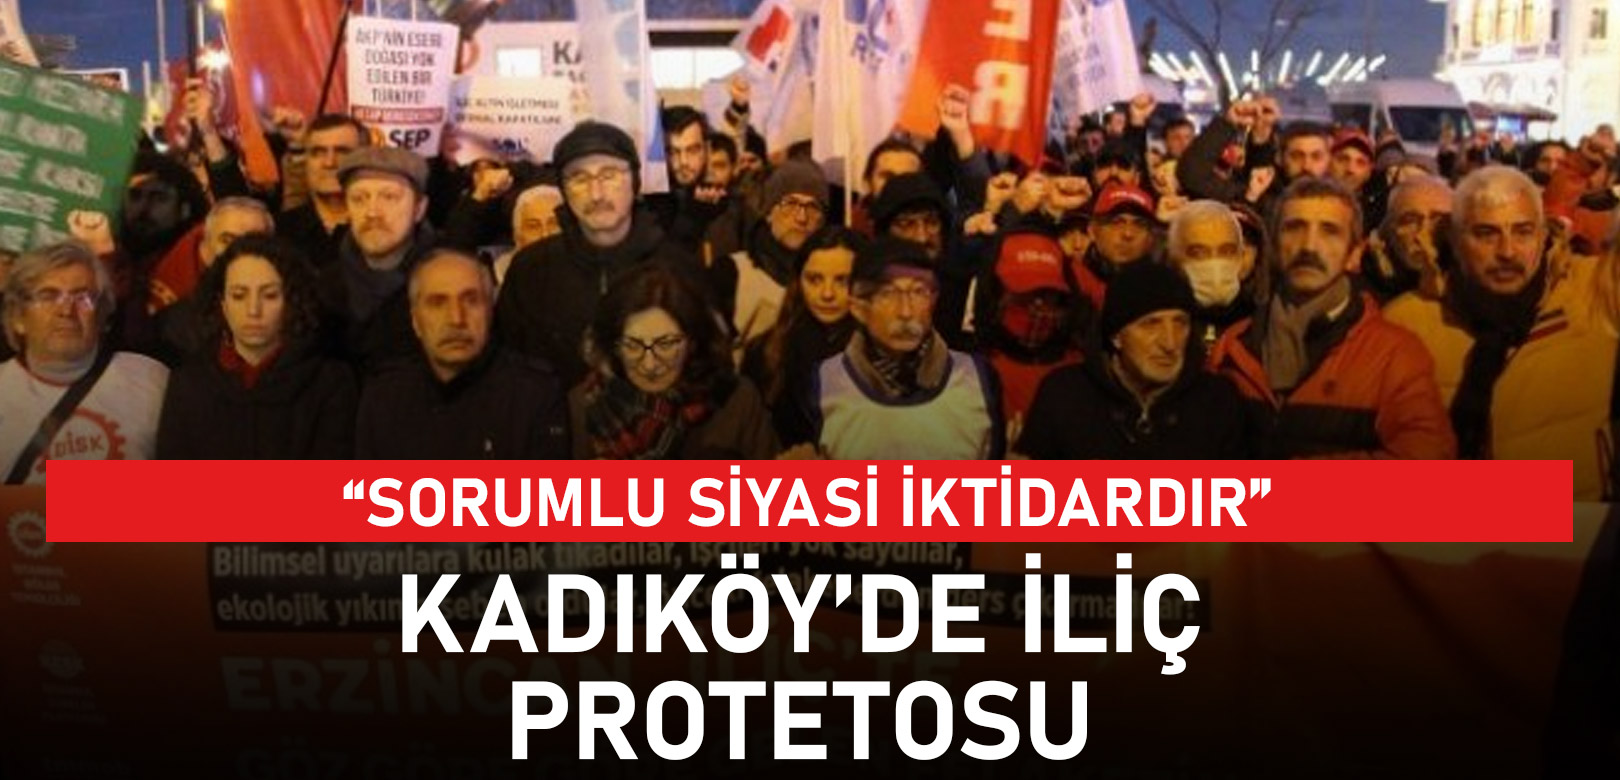 Kadıköy'de 'İliç' protestosu: Sorumlu siyasi iktidardır